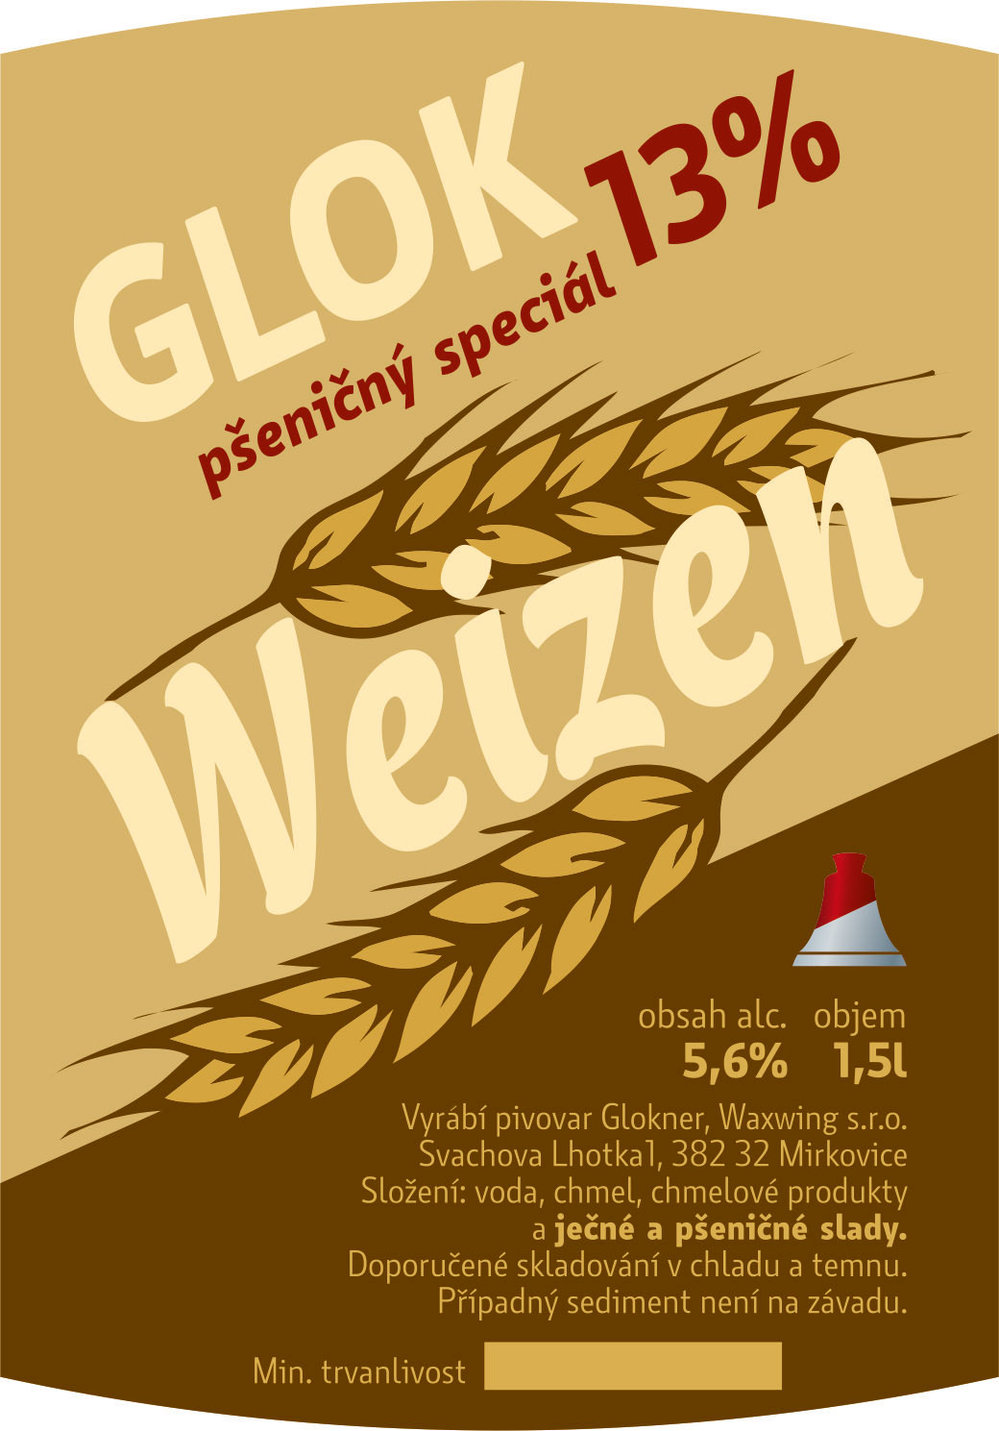 Glok 13 Weizen pšeničný speciál